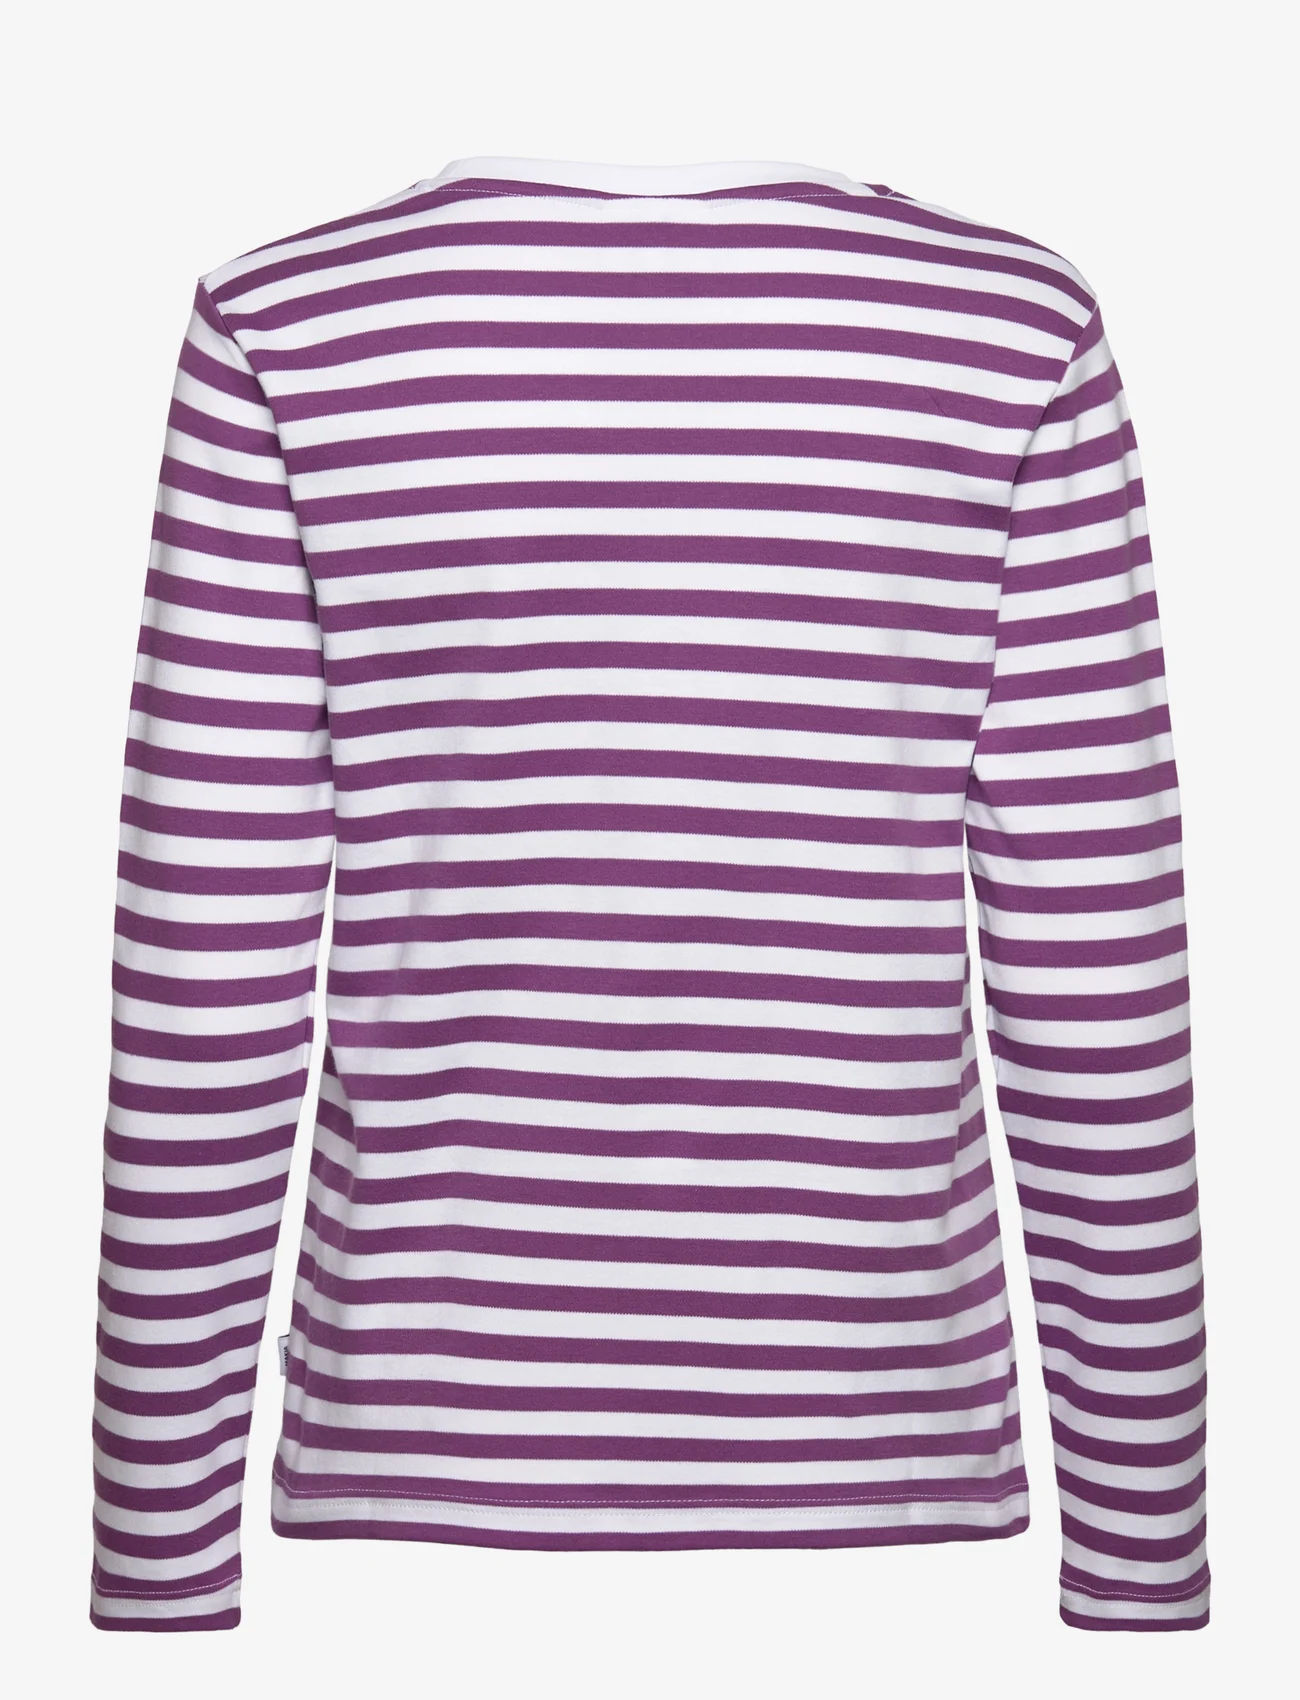 Makia - Verkstad Long Sleeve - t-shirts & tops - purple-white - 1